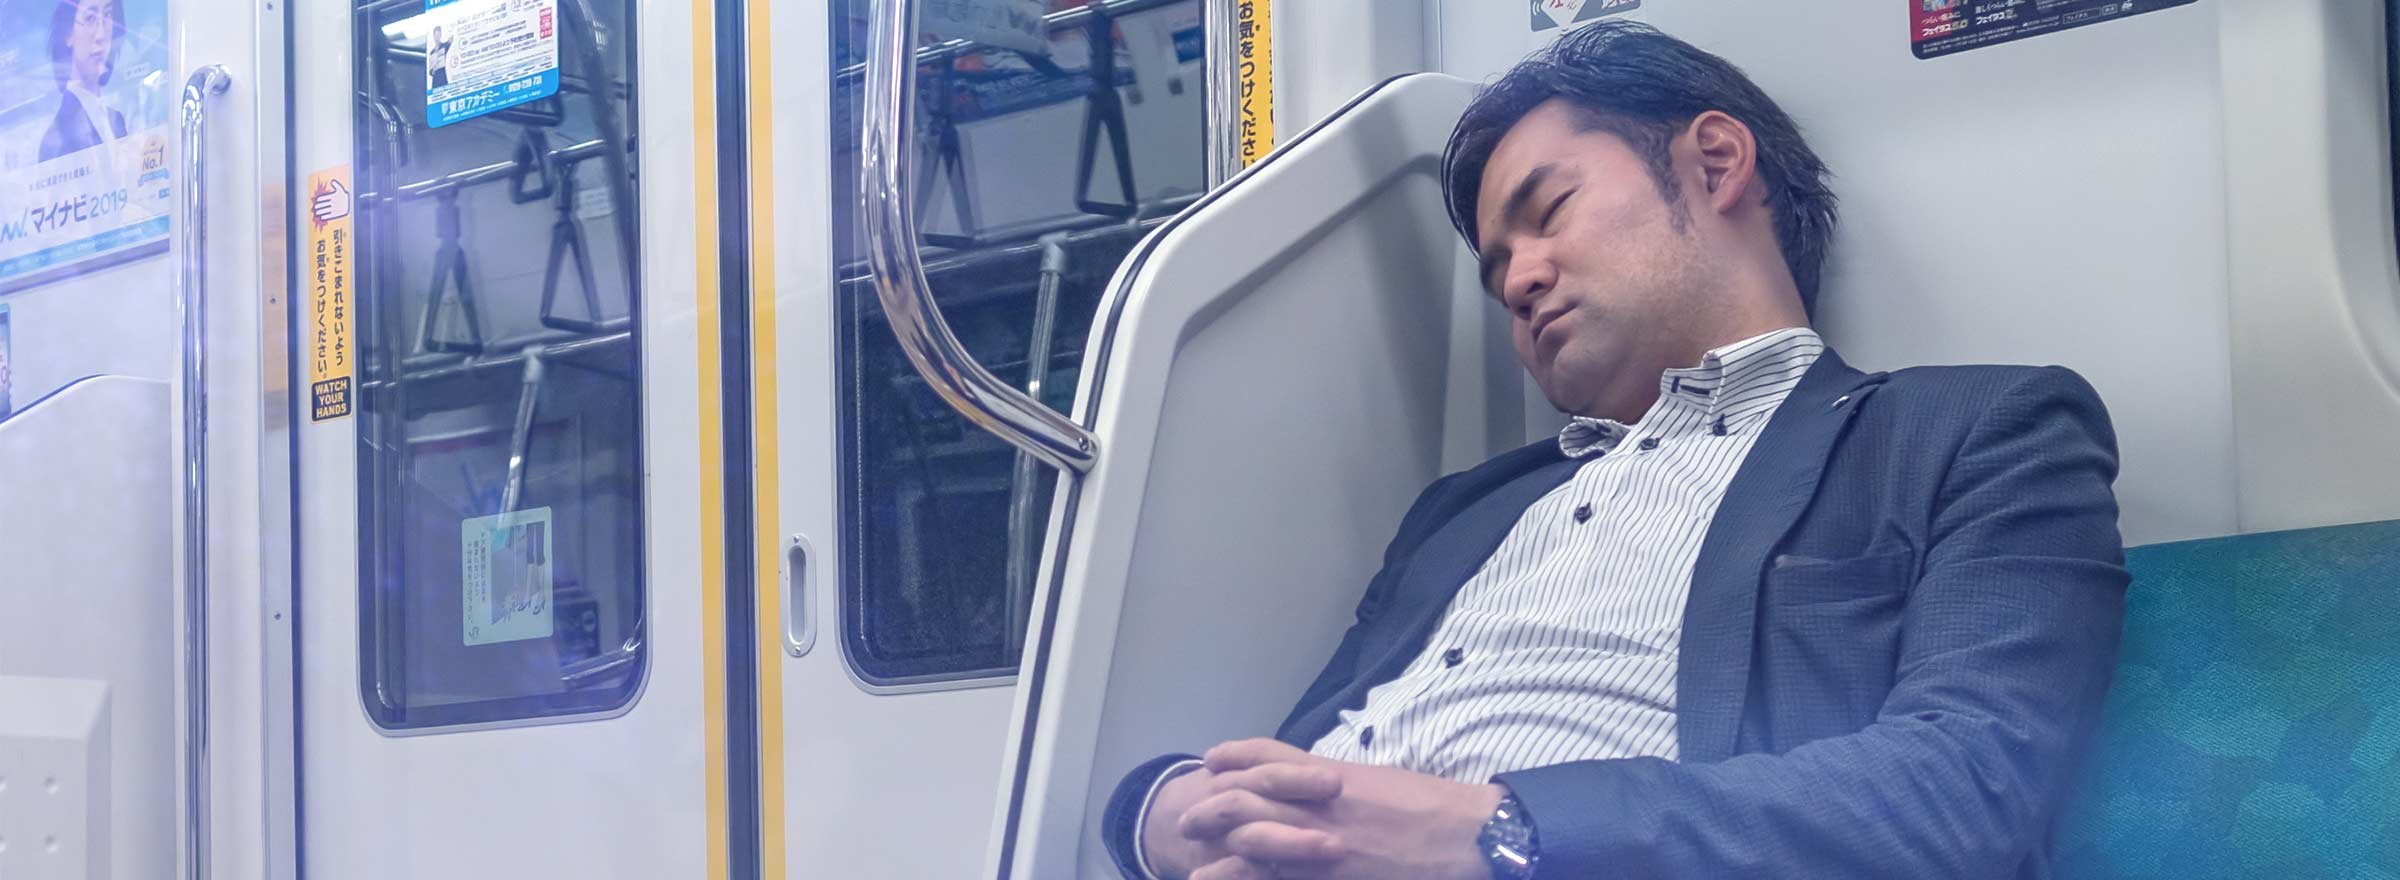 man sleeping on public transit